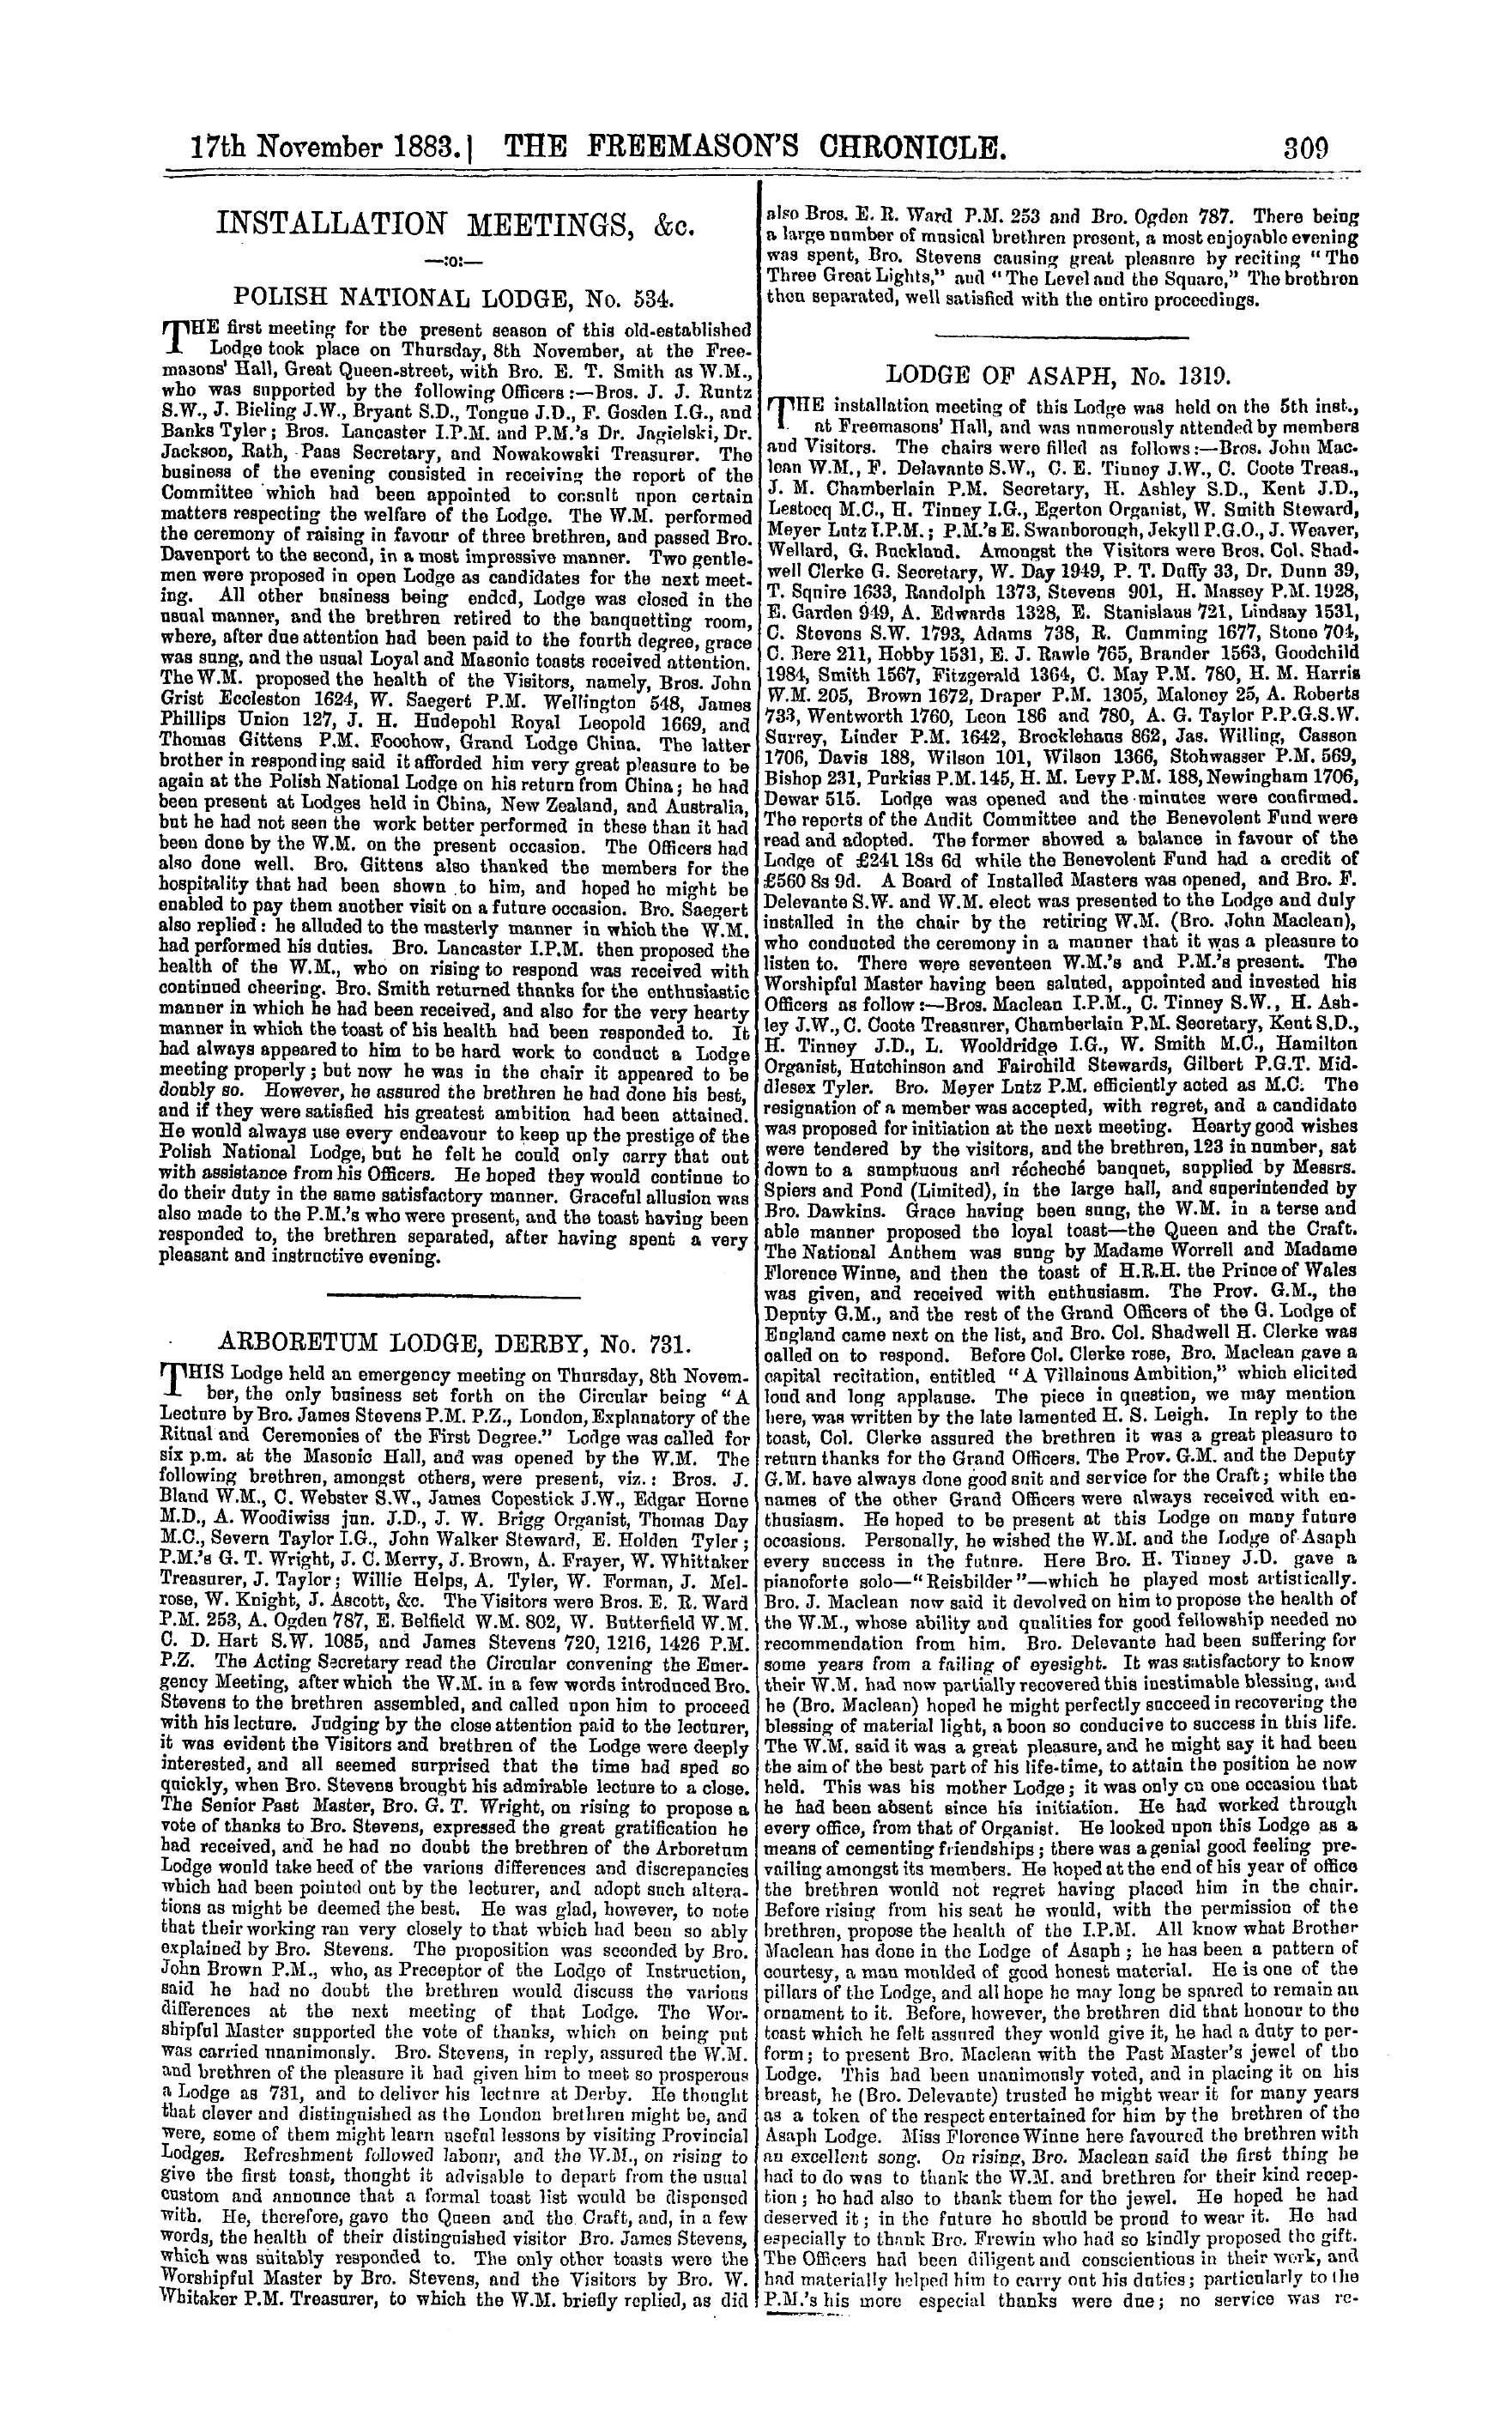 The Freemason's Chronicle: 1883-11-17: 5